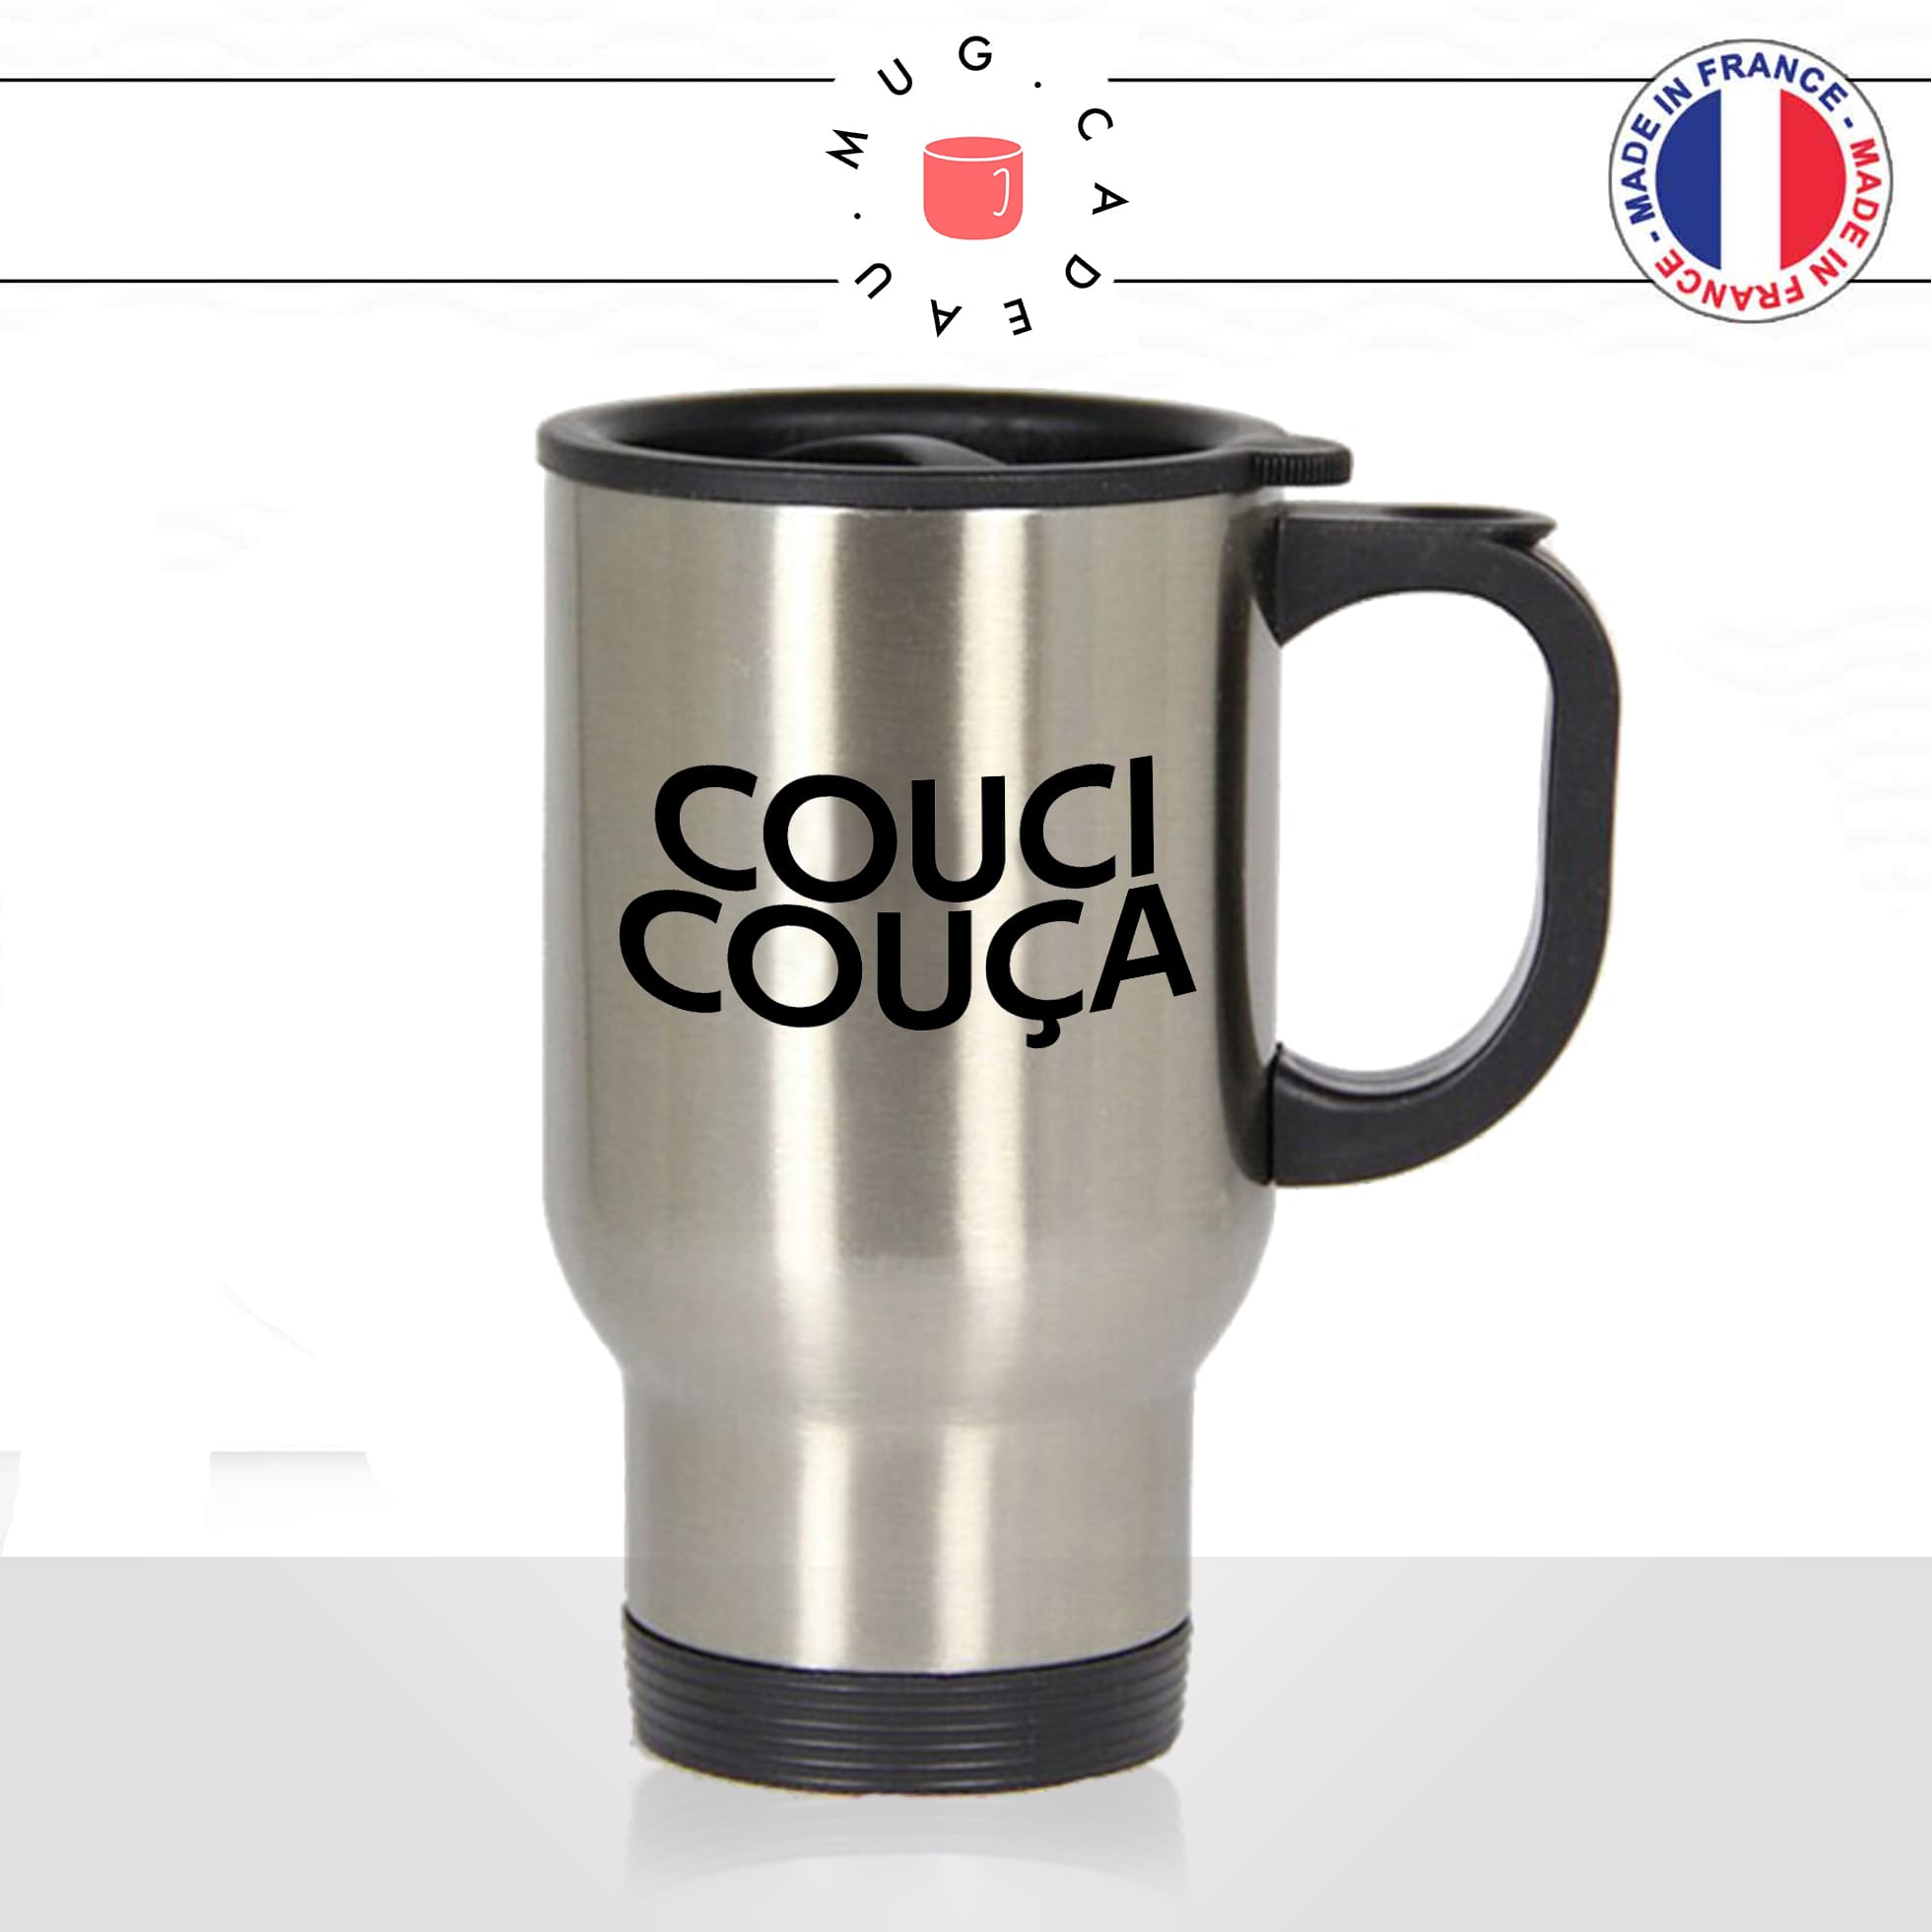 mug-tasse-thermos-isotherme-voyage-couci-couca-coussi-coussa-expression-francaise-humour-fun-idée-cadeau-originale-cool2